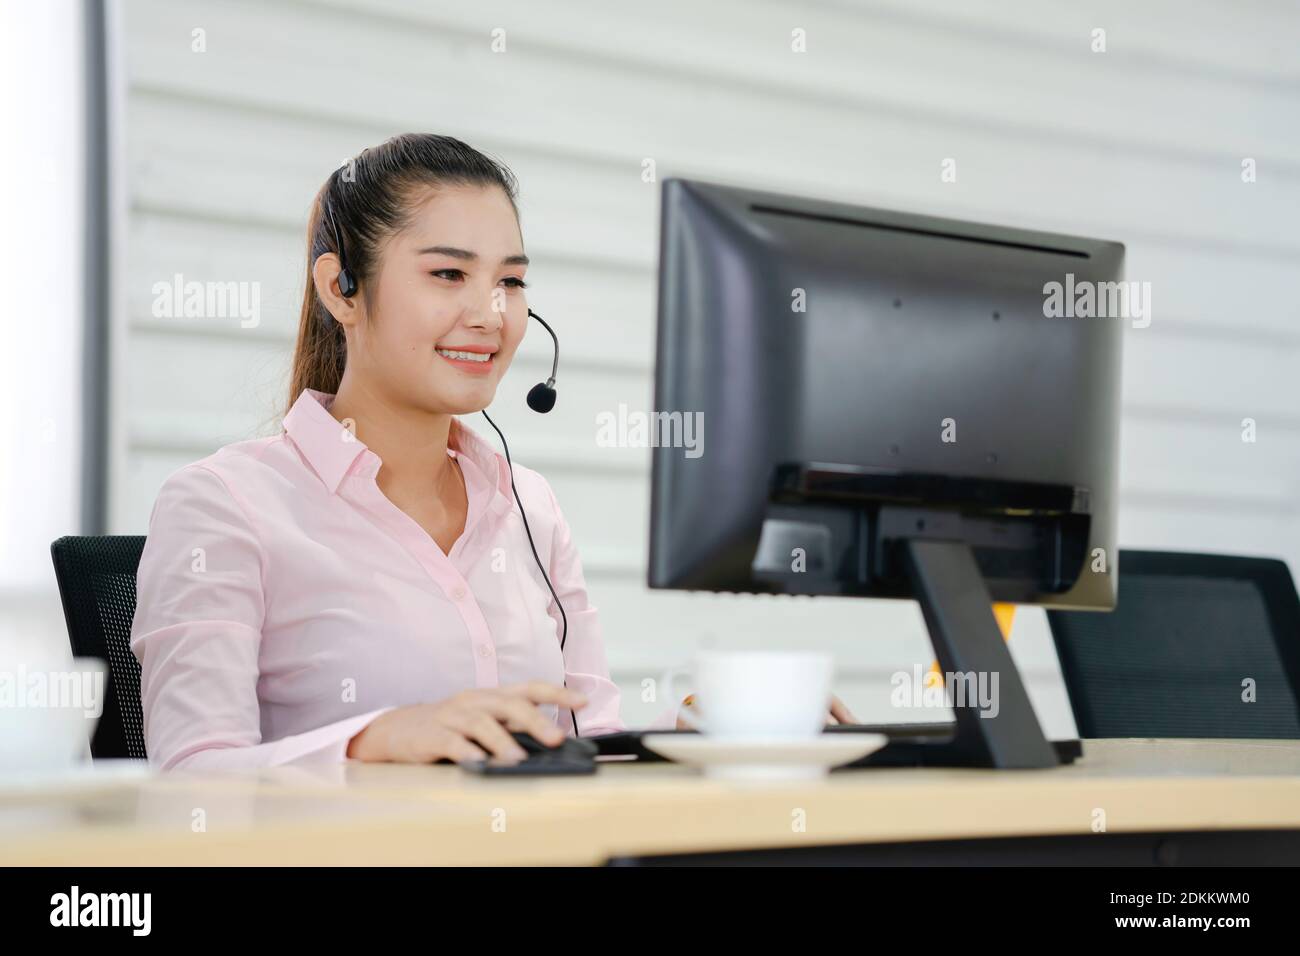 Customer Service Representative Using Computer At Office Desk Stock Photo